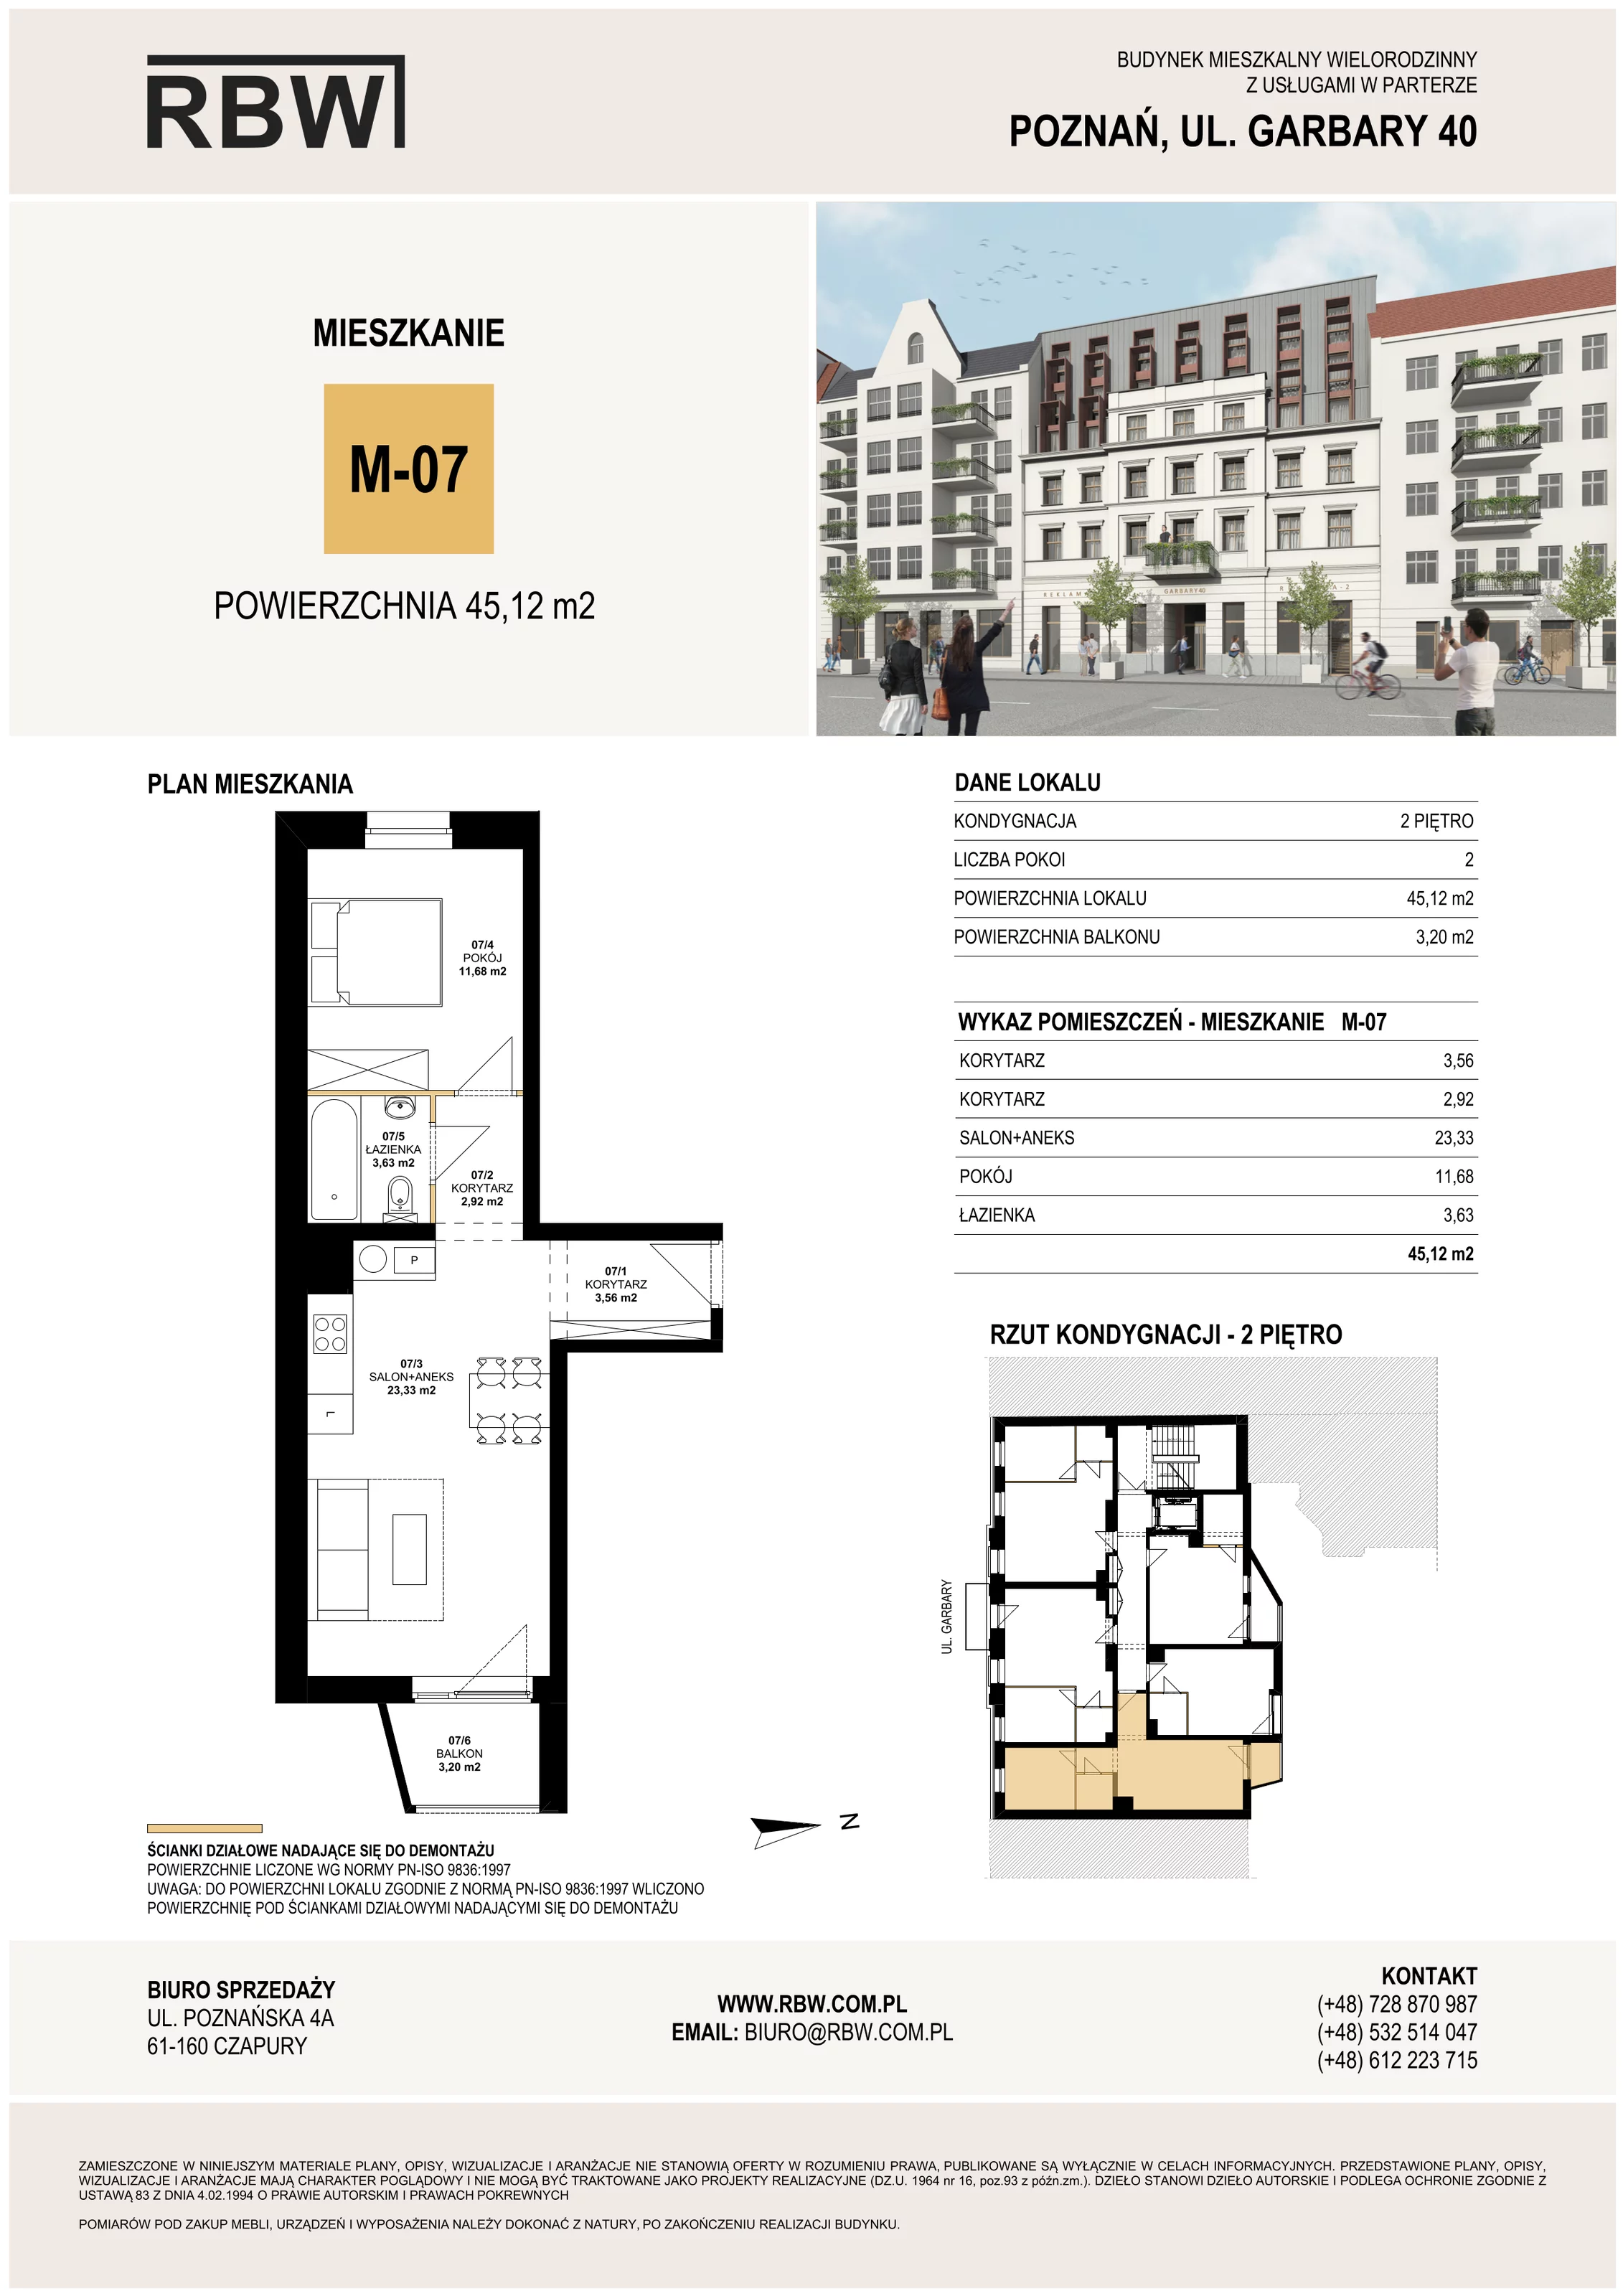 Mieszkanie 45,12 m², piętro 2, oferta nr M7, Garbary 40, Poznań, Stare Miasto, Stare Miasto, ul. Garbary 40